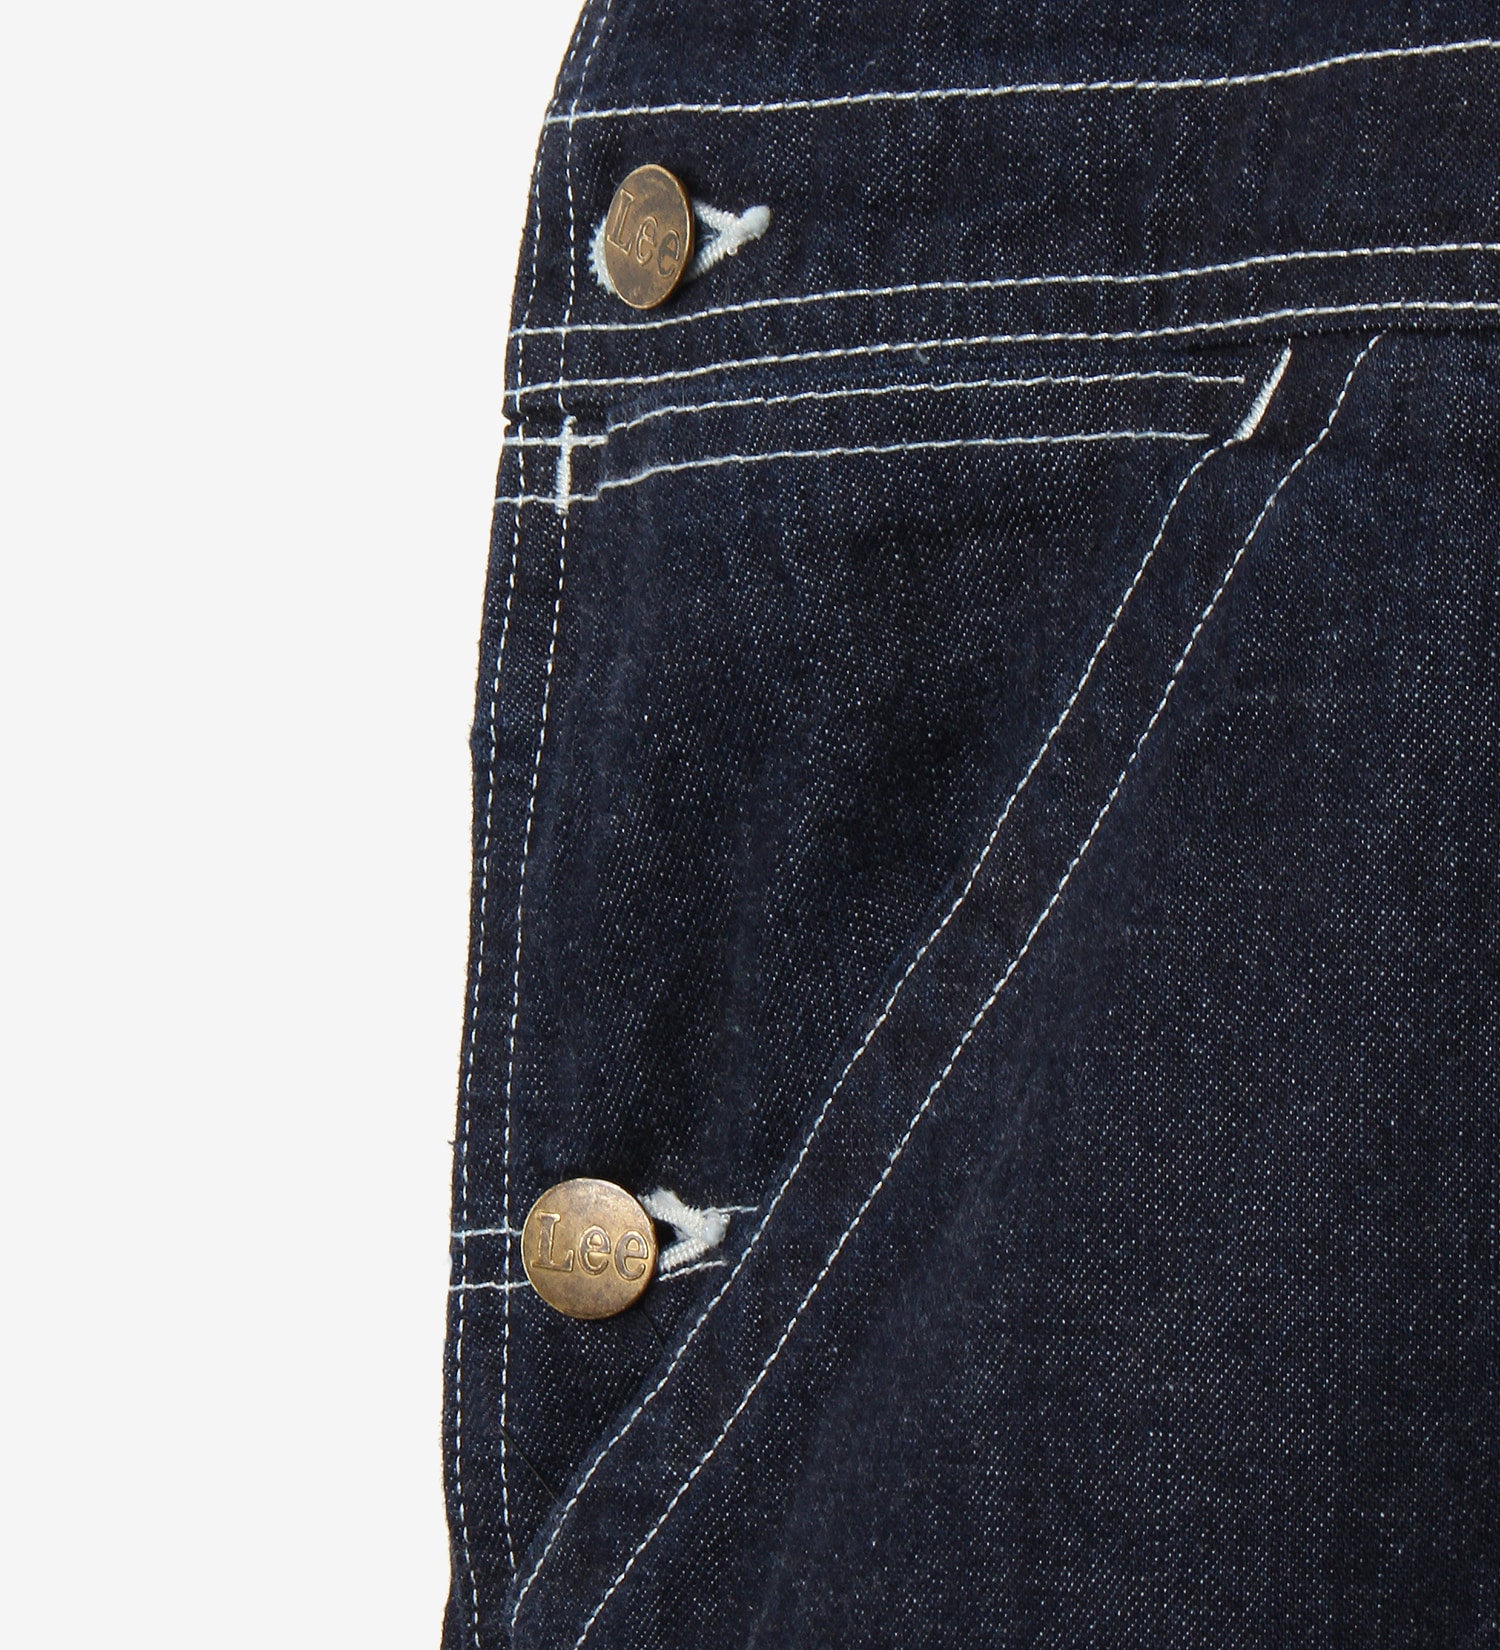 Lee(リー)の【NewJeans着用】SPUR3月号掲載アイテム　DUNGAREESオーバーオールパンツ|オールインワン/サロペット/オーバーオール/メンズ|インディゴブルー